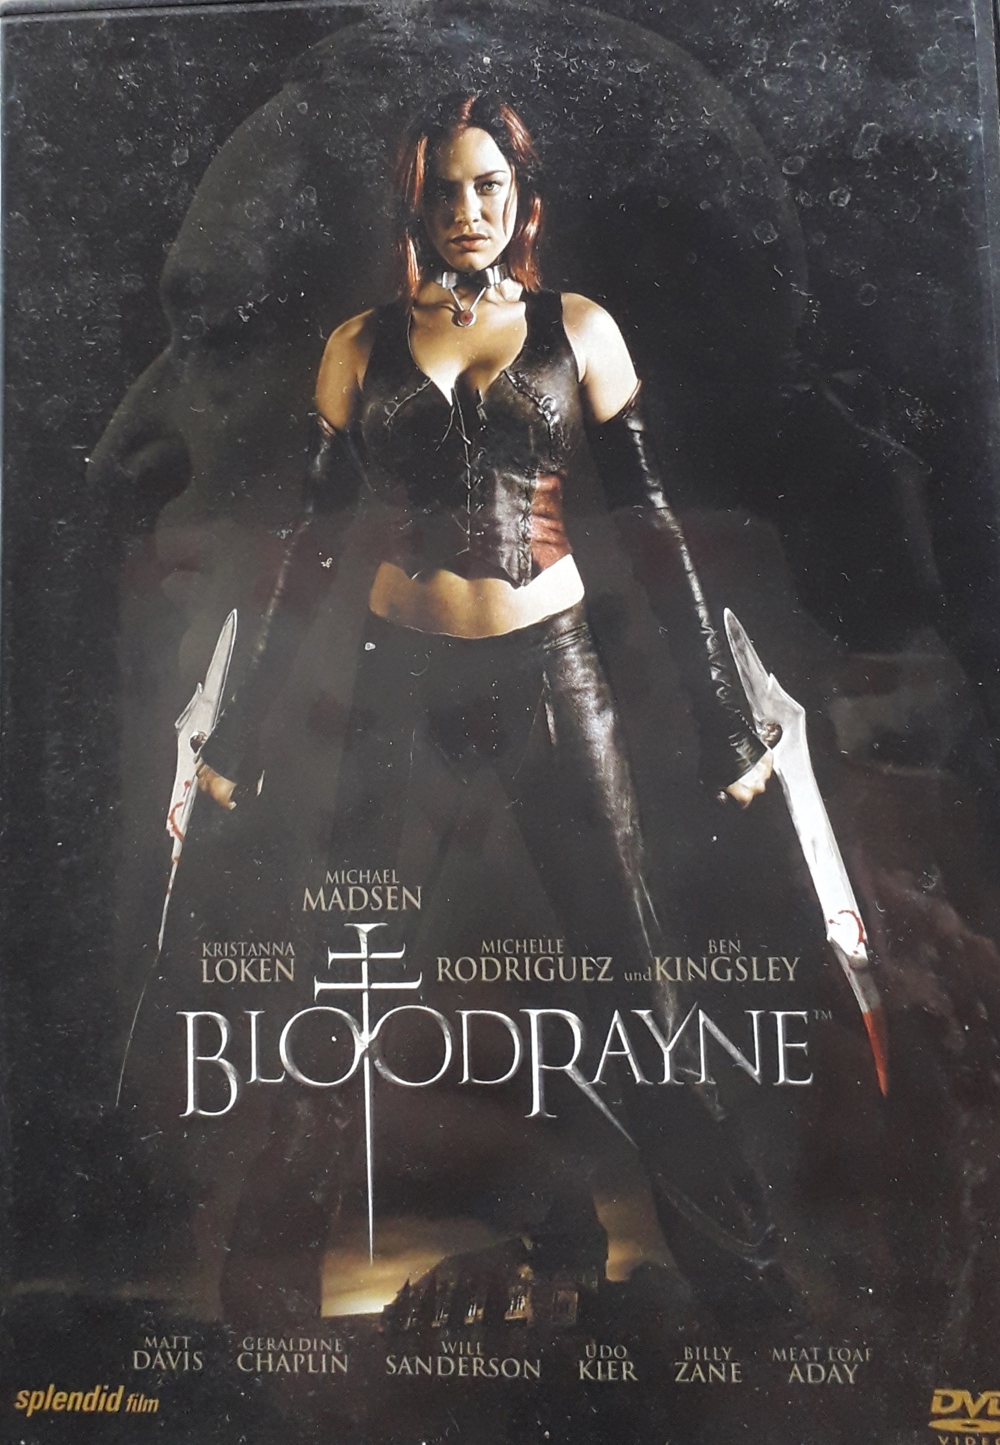 DVD "BLOODRAYNE"